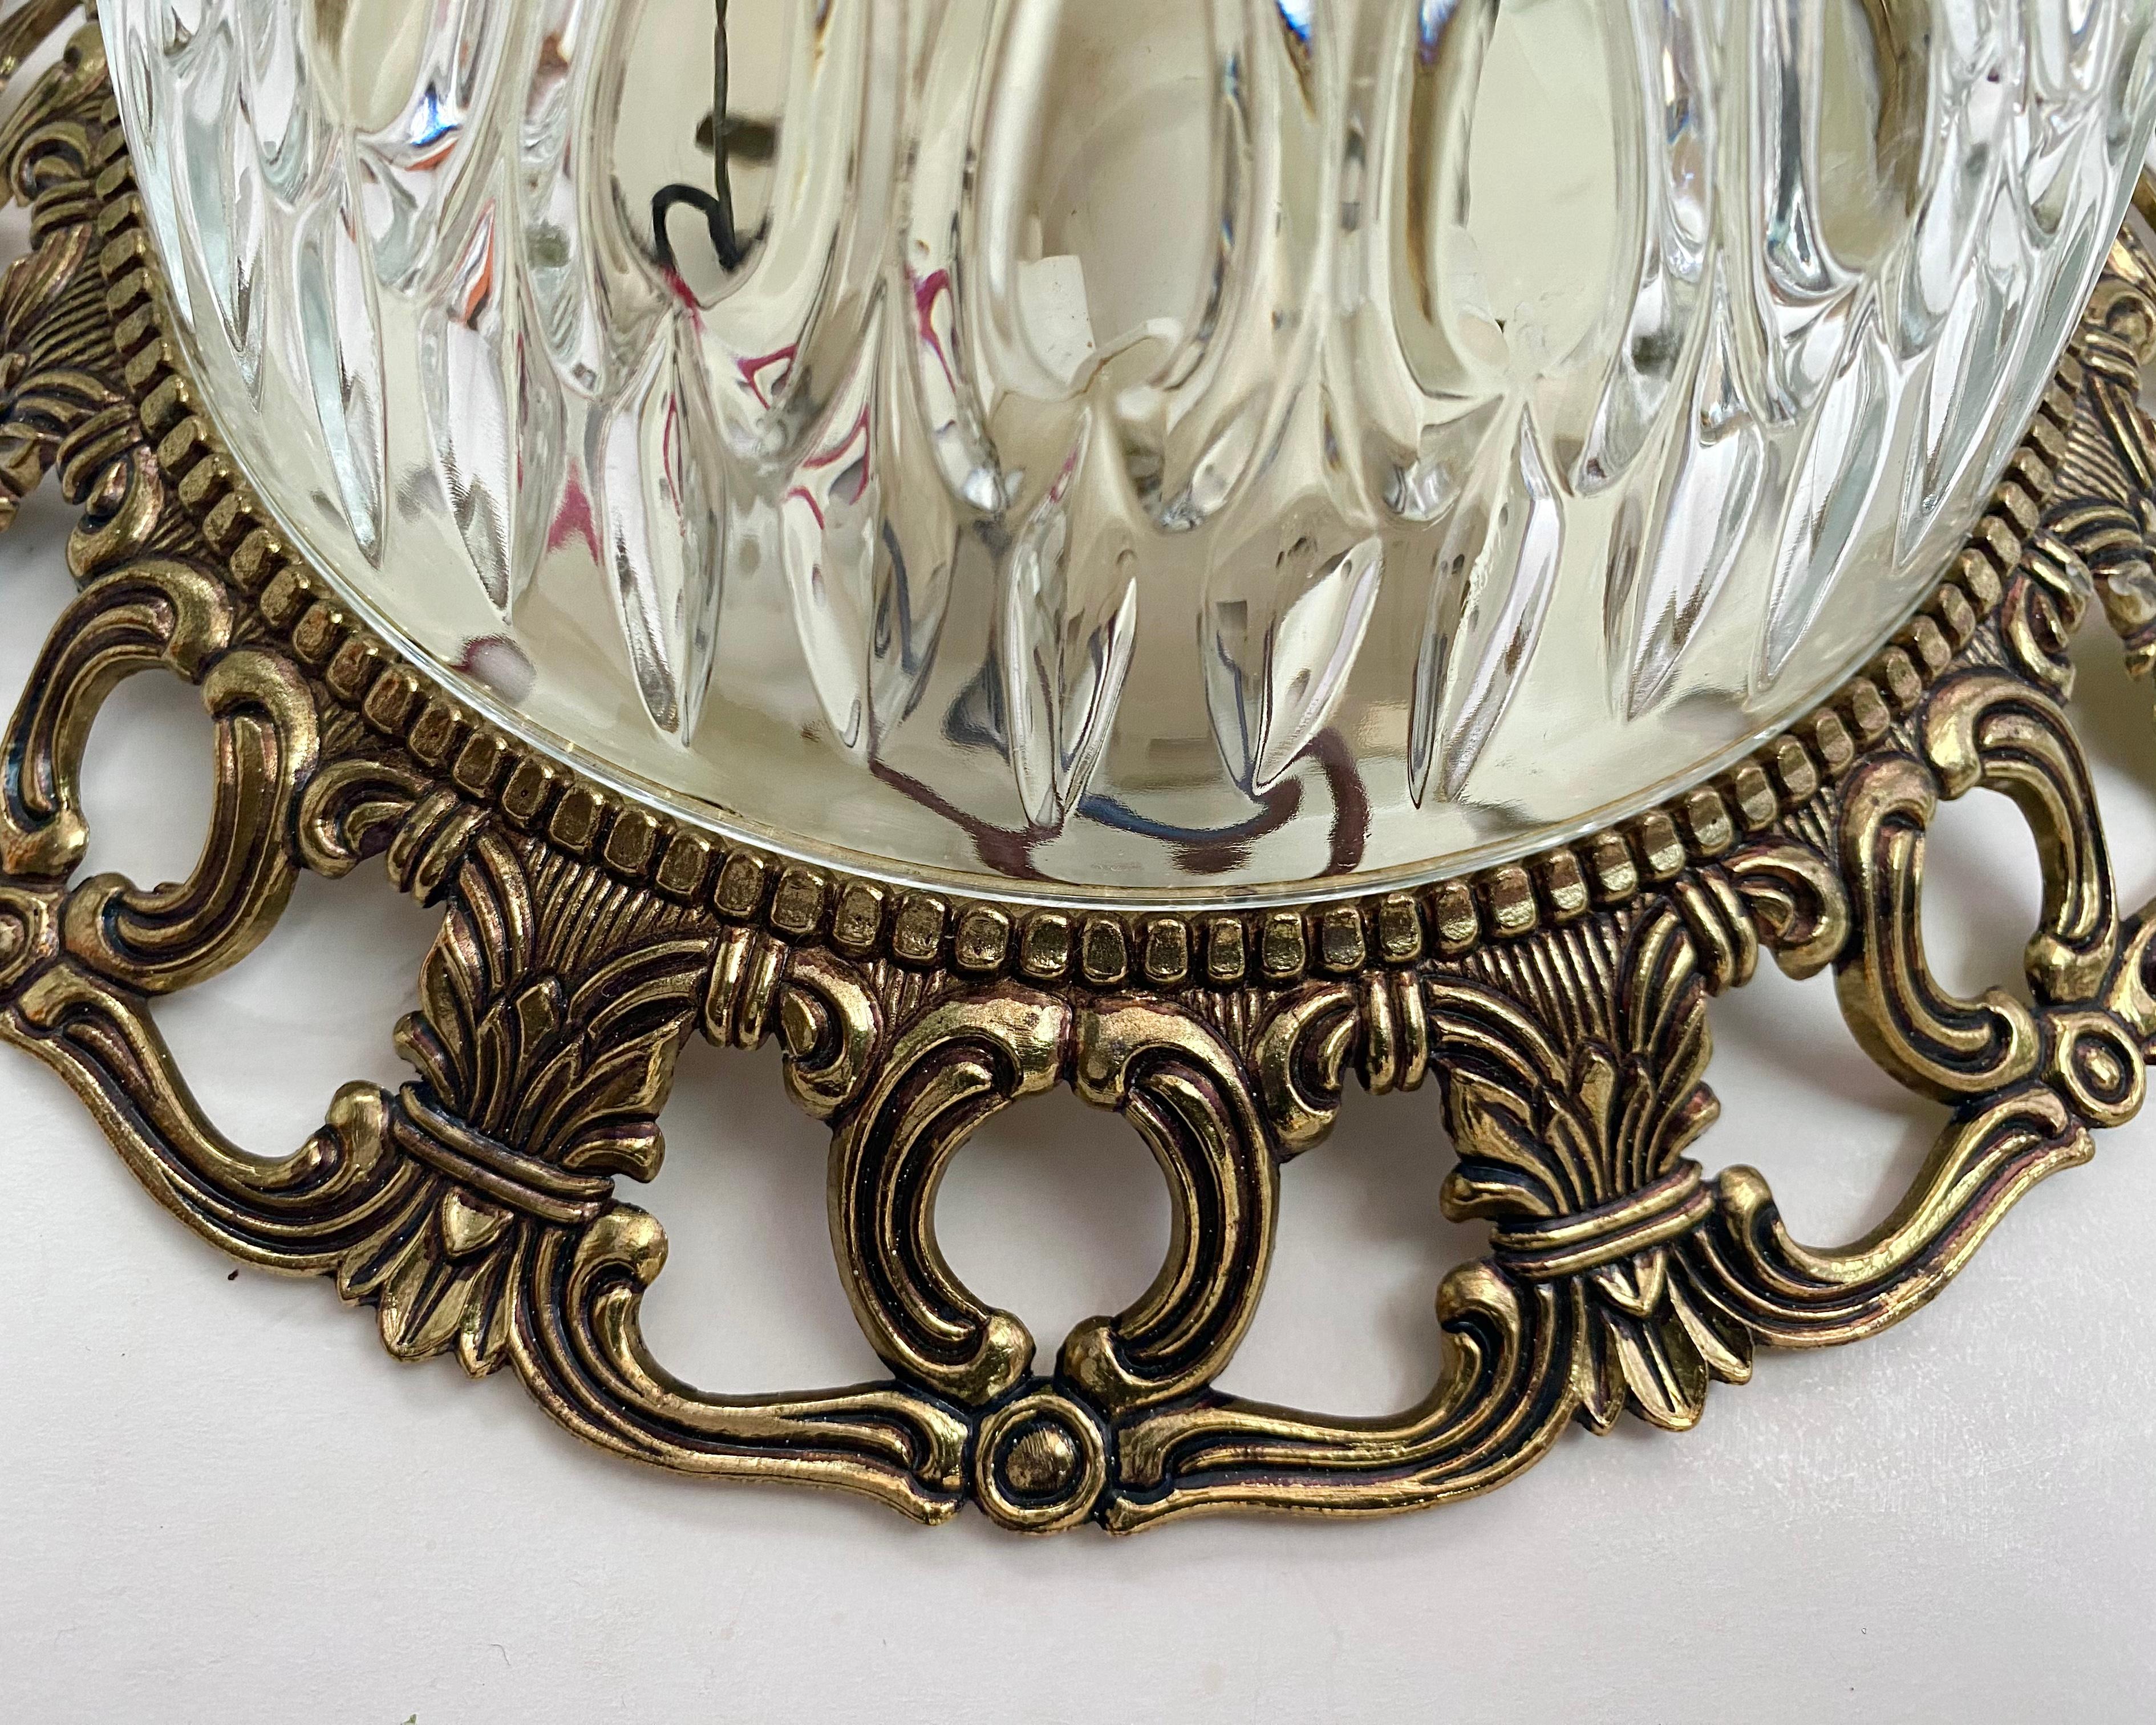 Belgian Vintage Flush Mount Lighting Brass and Glass By Massive Lighting Belgium For Sale